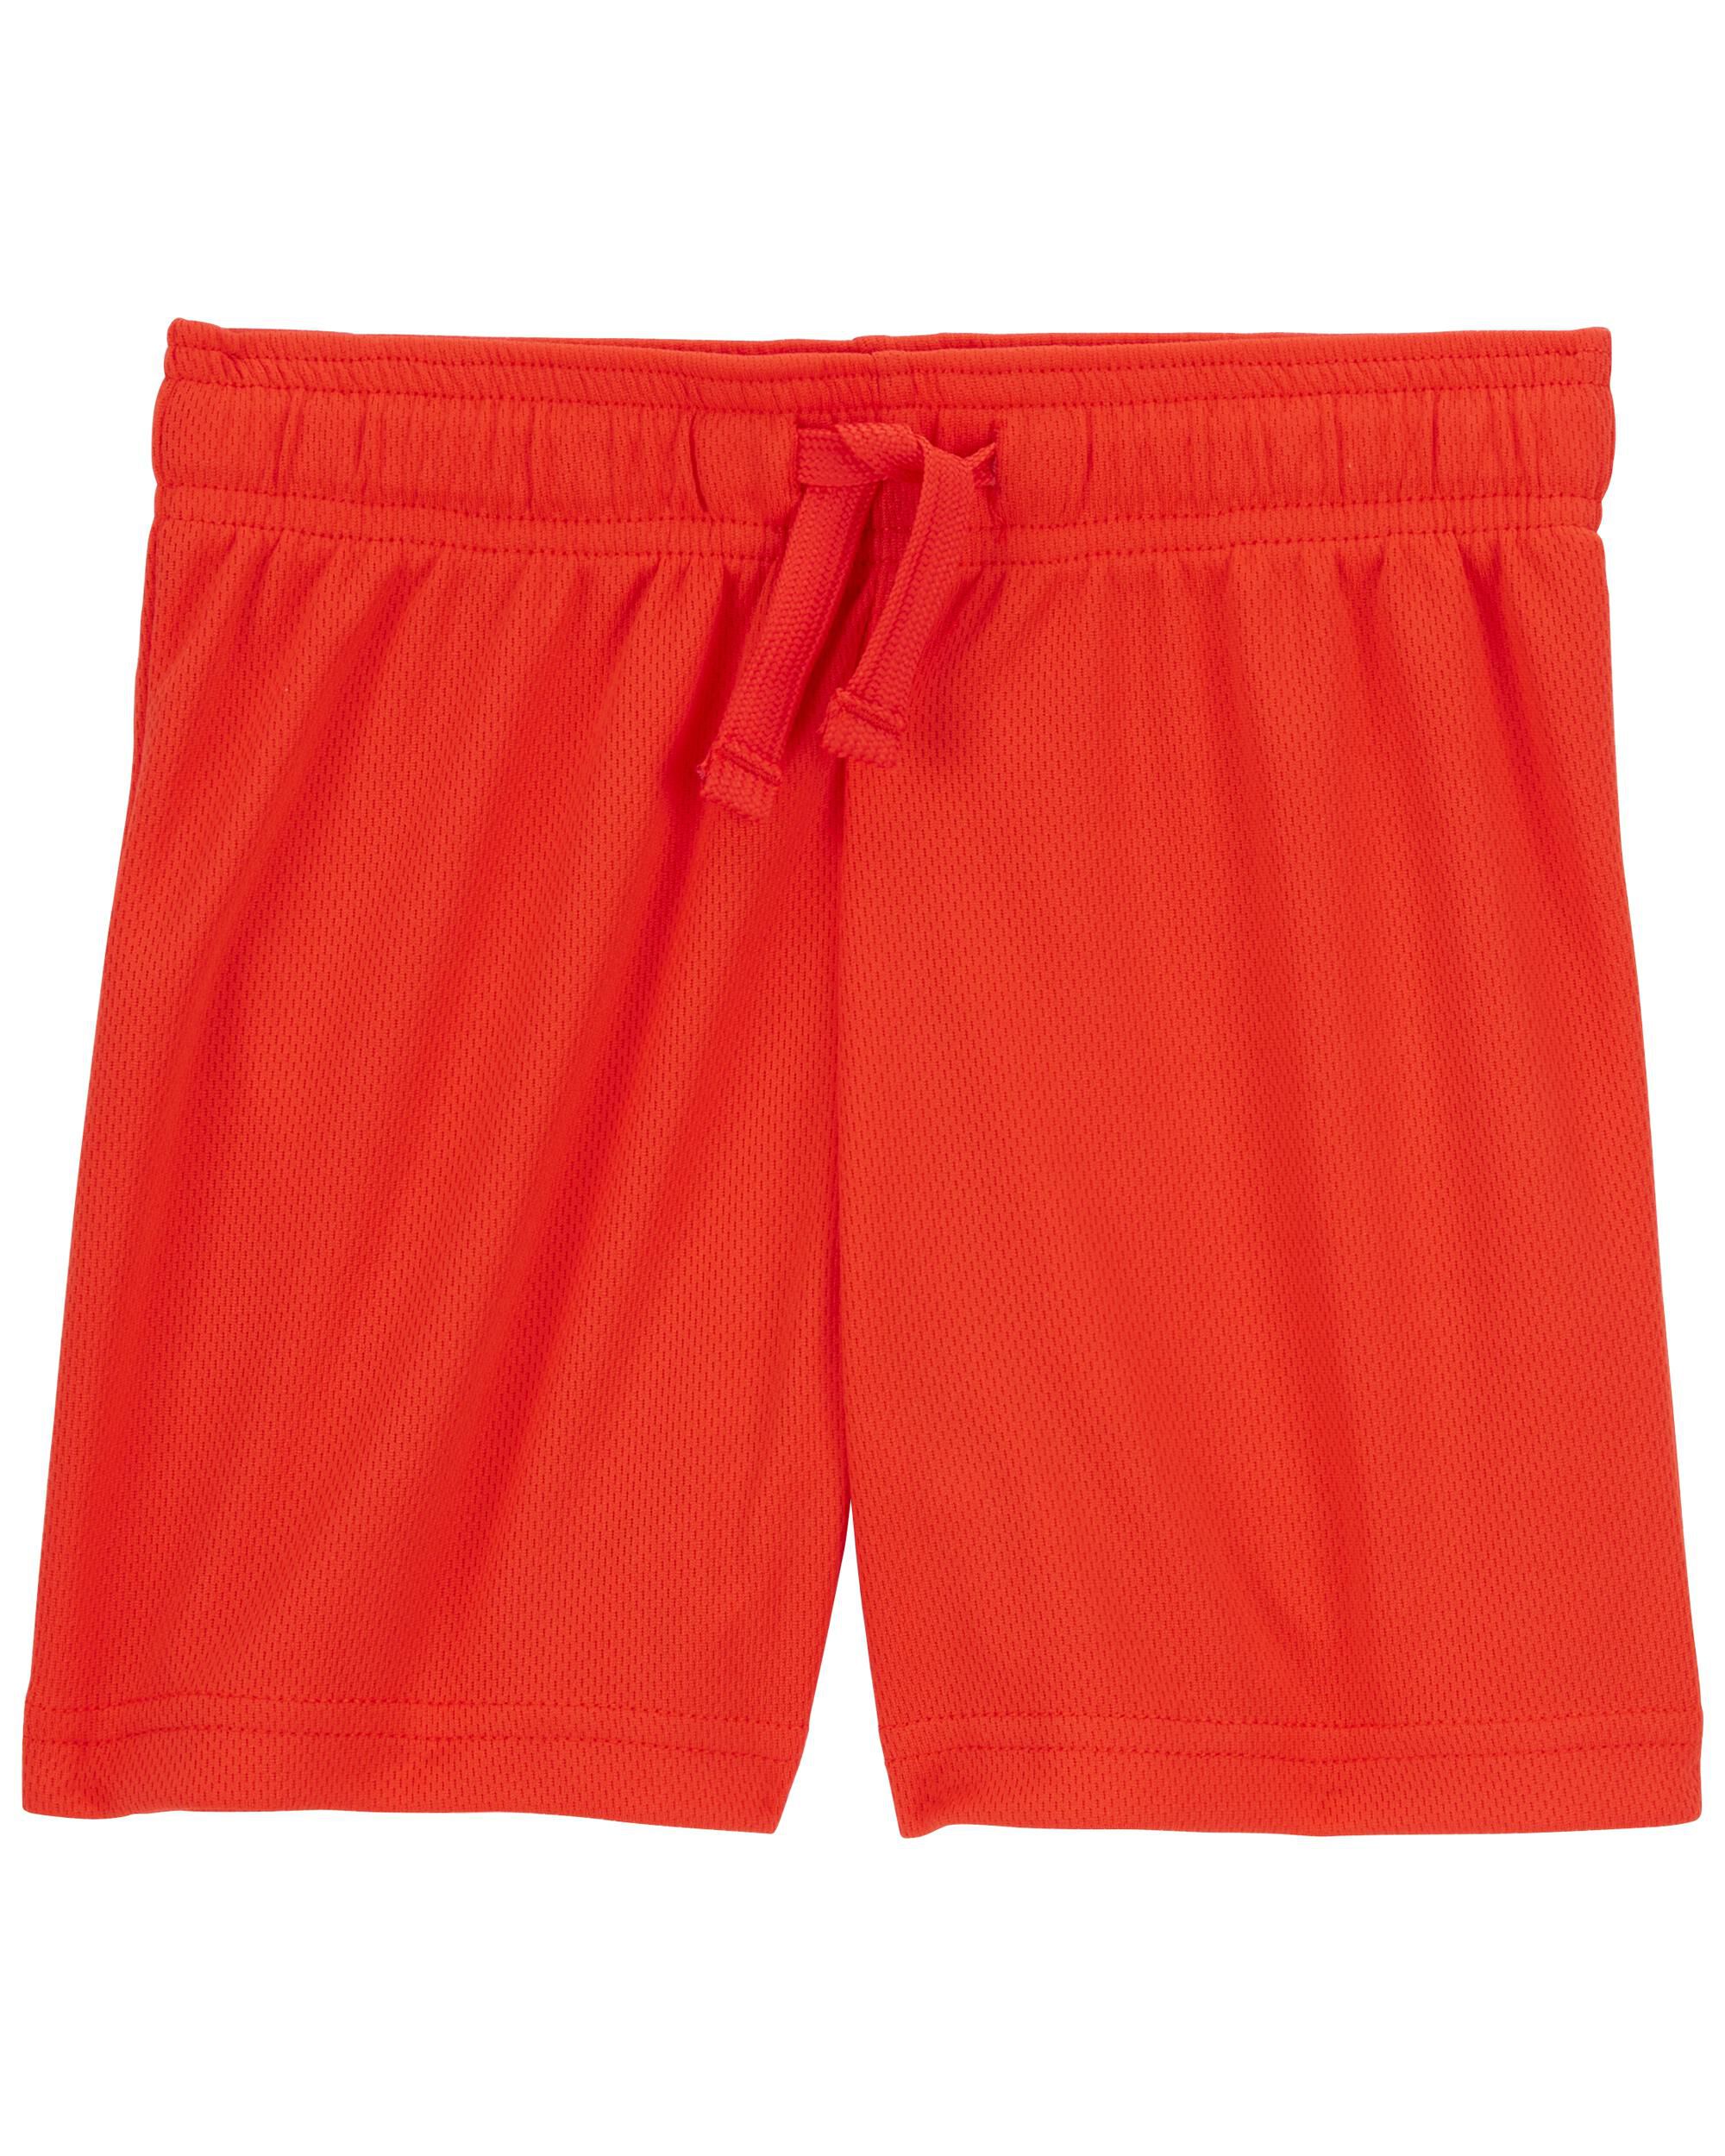 Orange-Red Toddler Athletic Mesh Shorts | carters.com